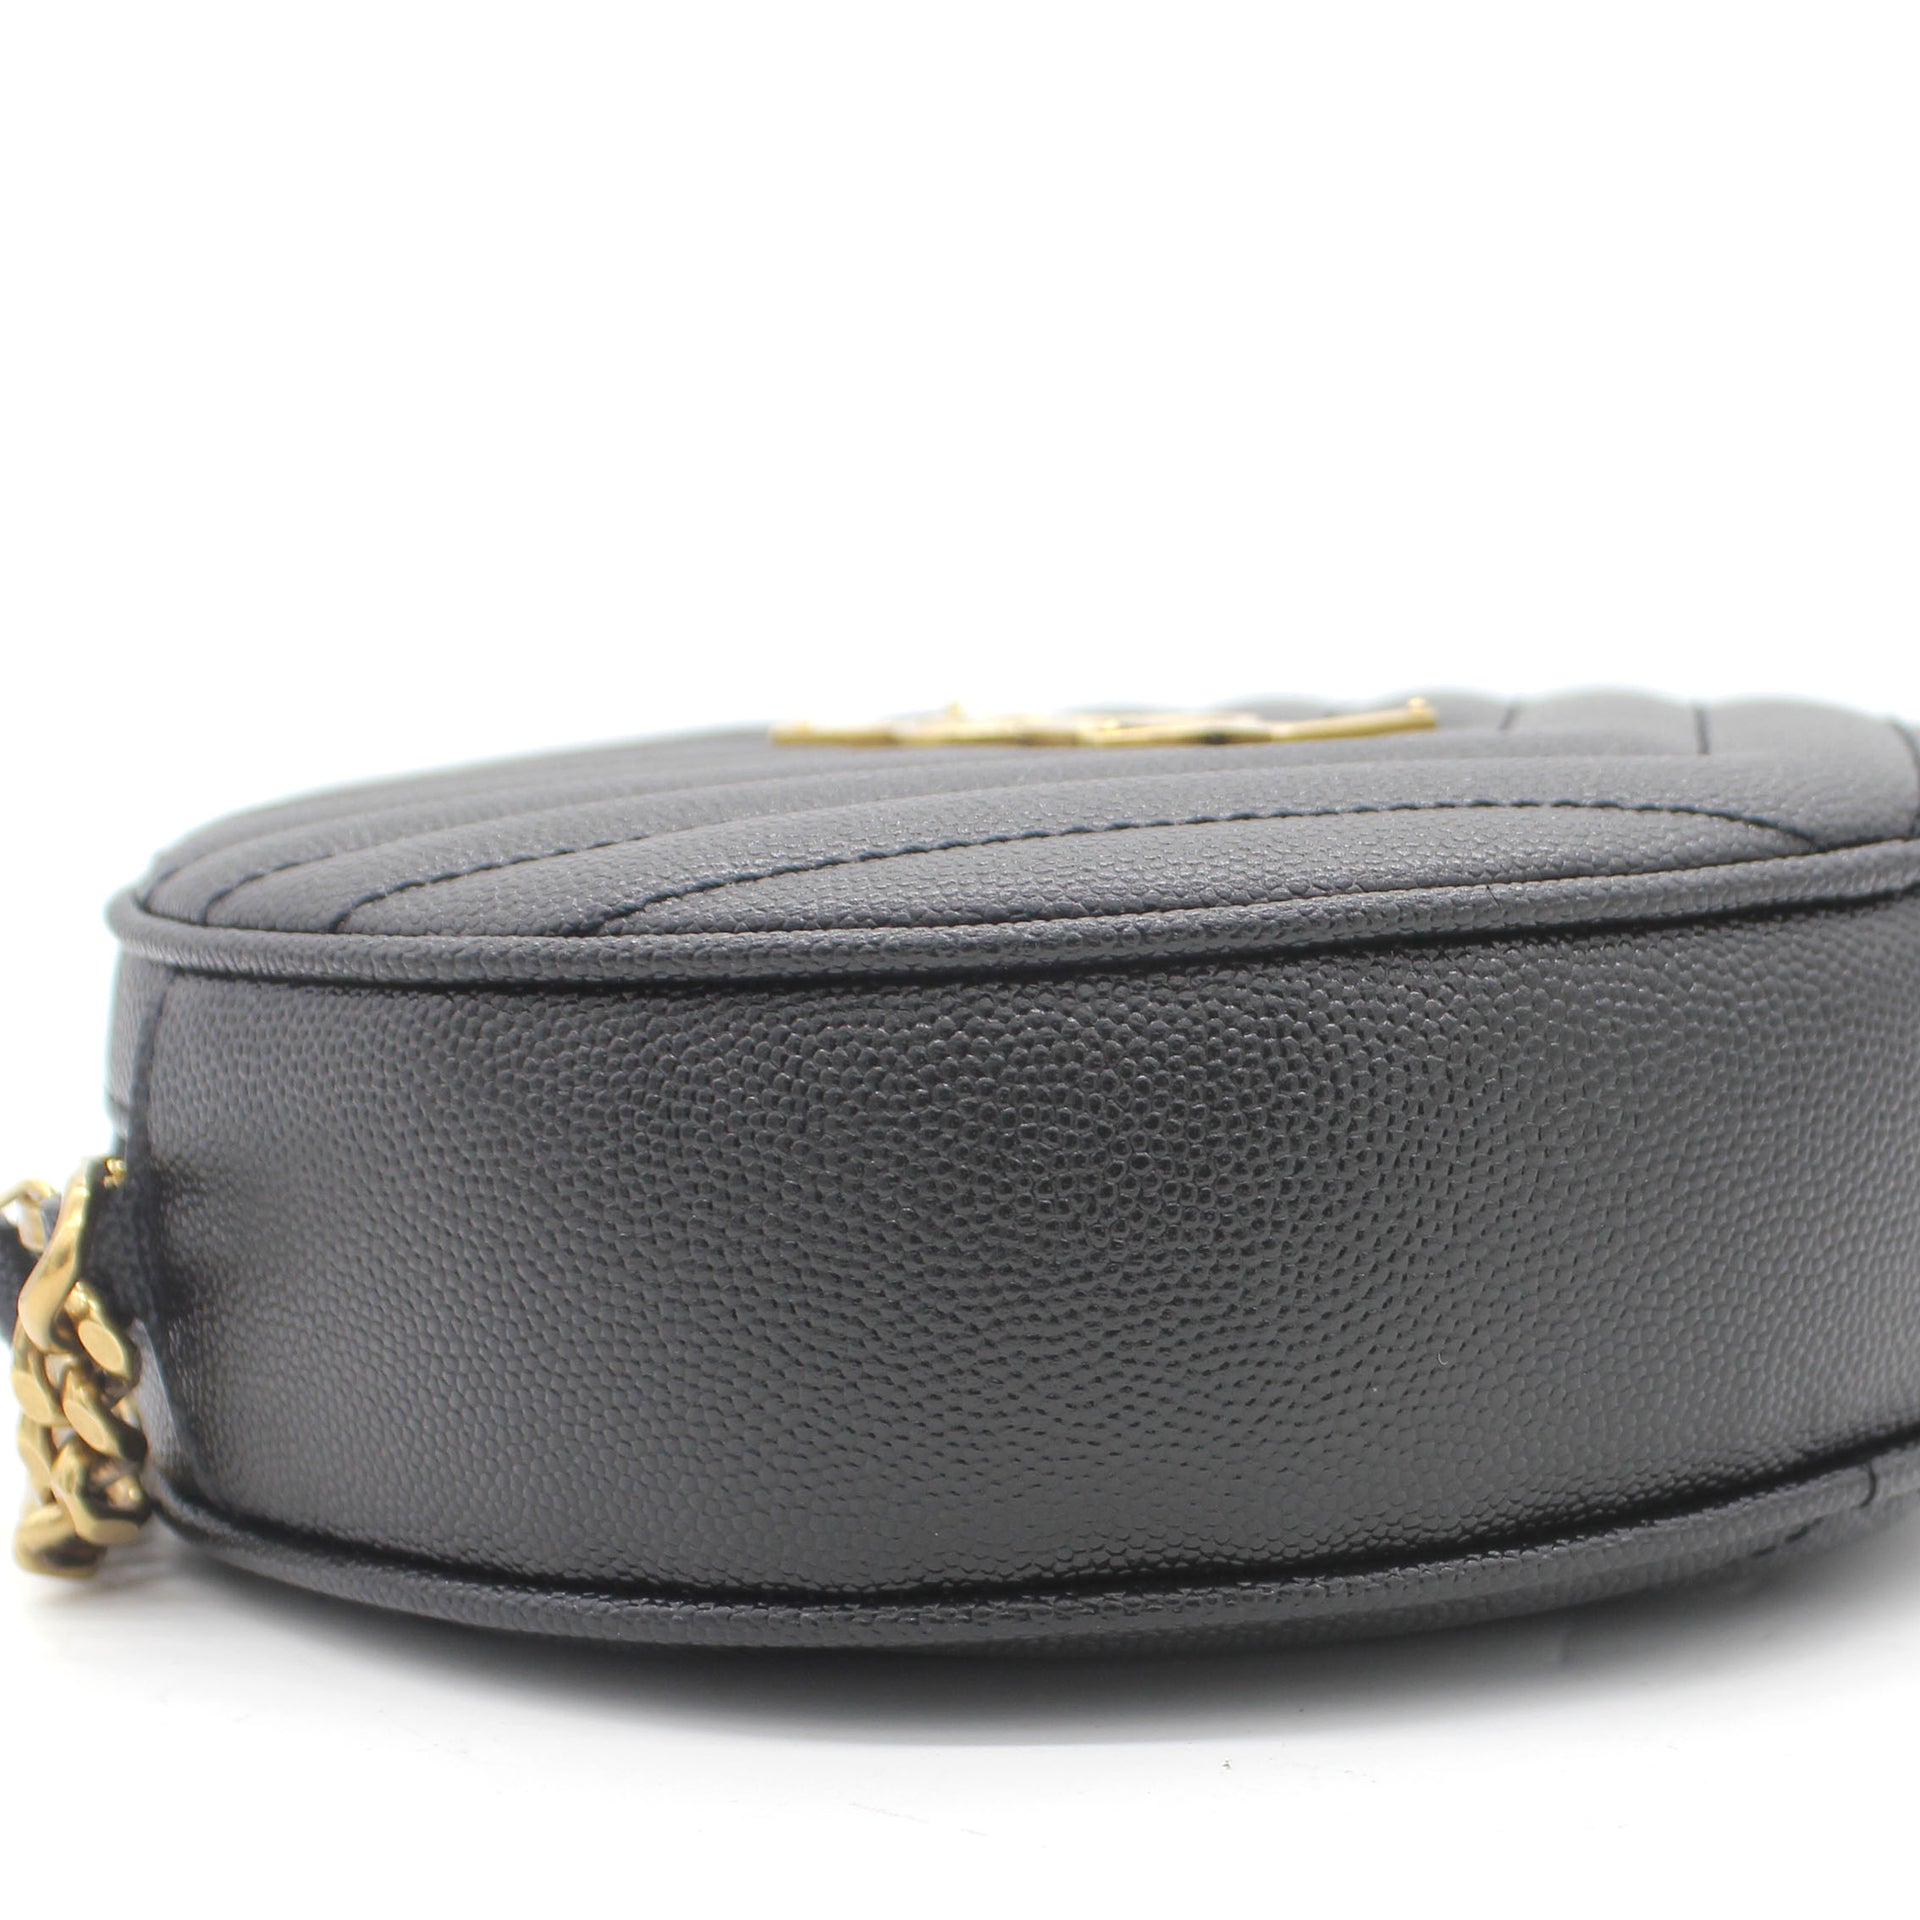 Black Leather Round Vinyle Chevron-Quilted Crossbody Bag